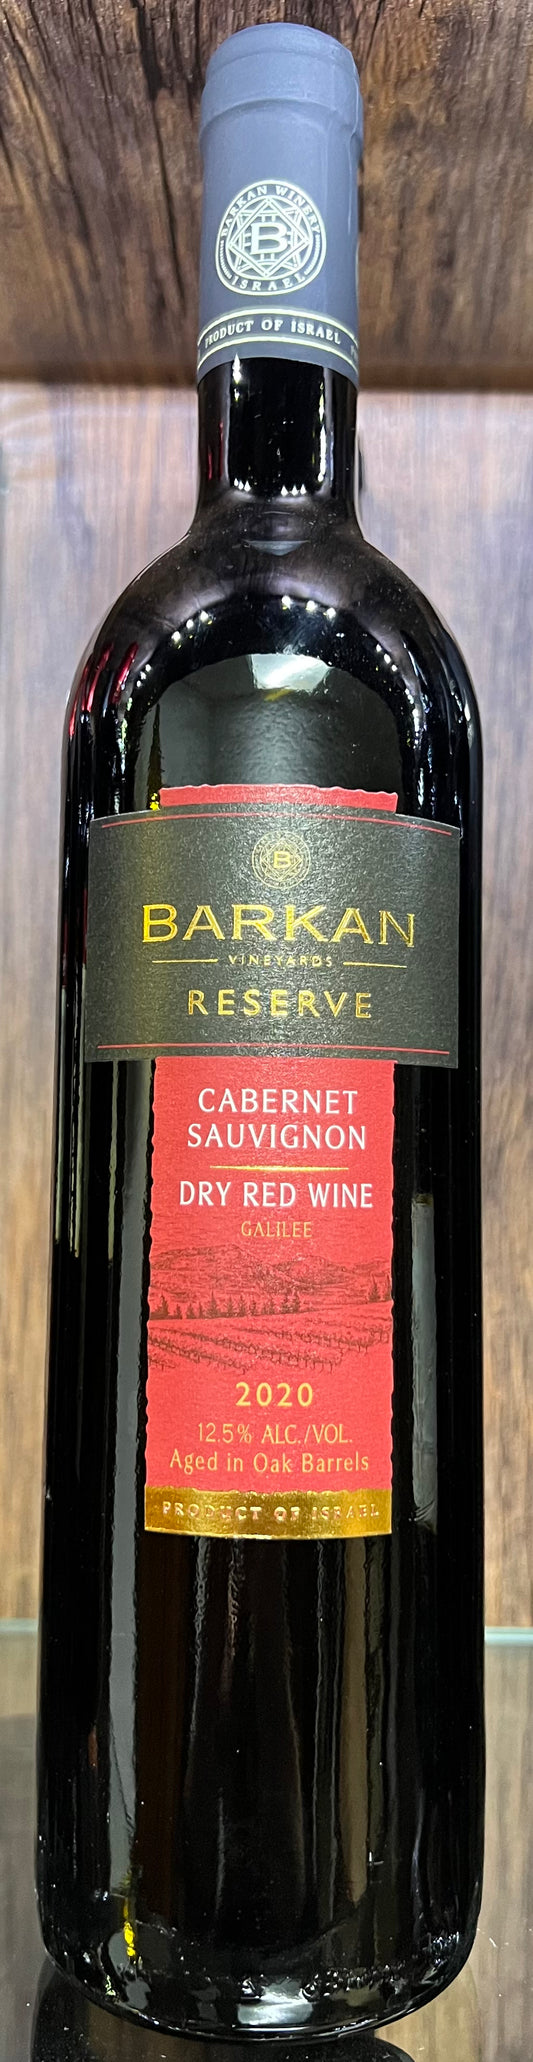 Barkan Reserve Cabernet Sauvignon 2020 Aged in Oak Barrels